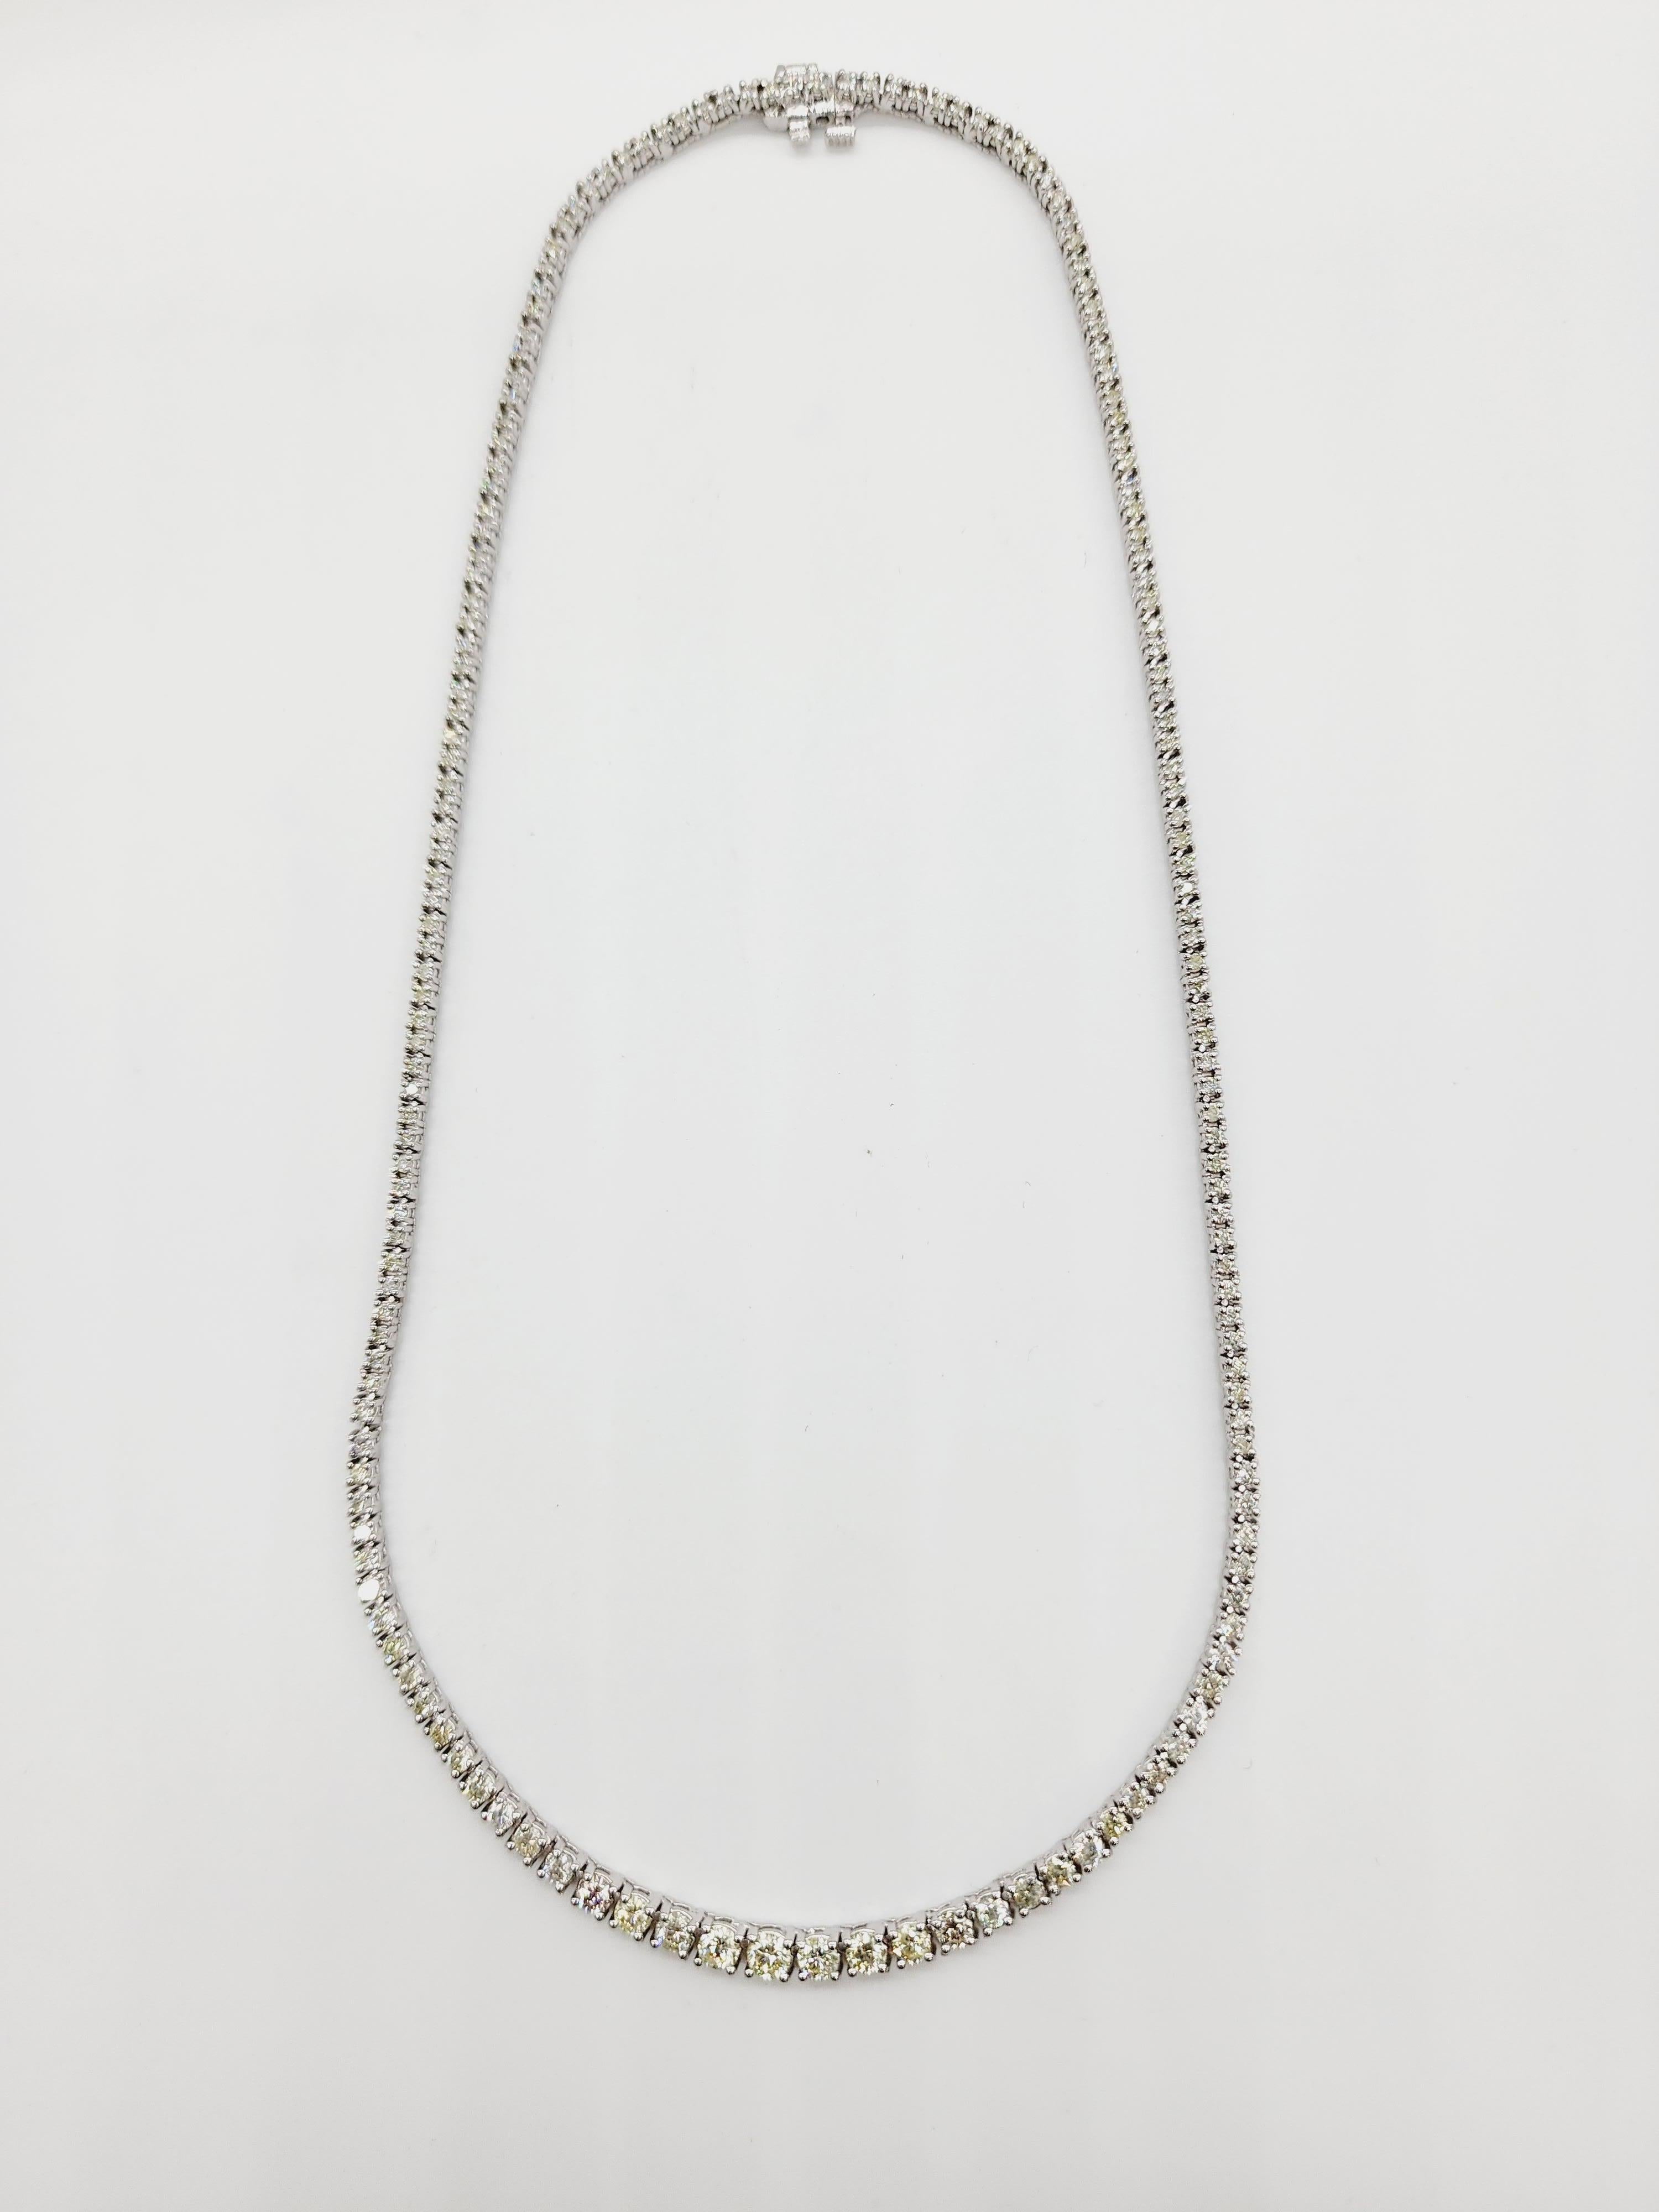 5 carat tennis necklace